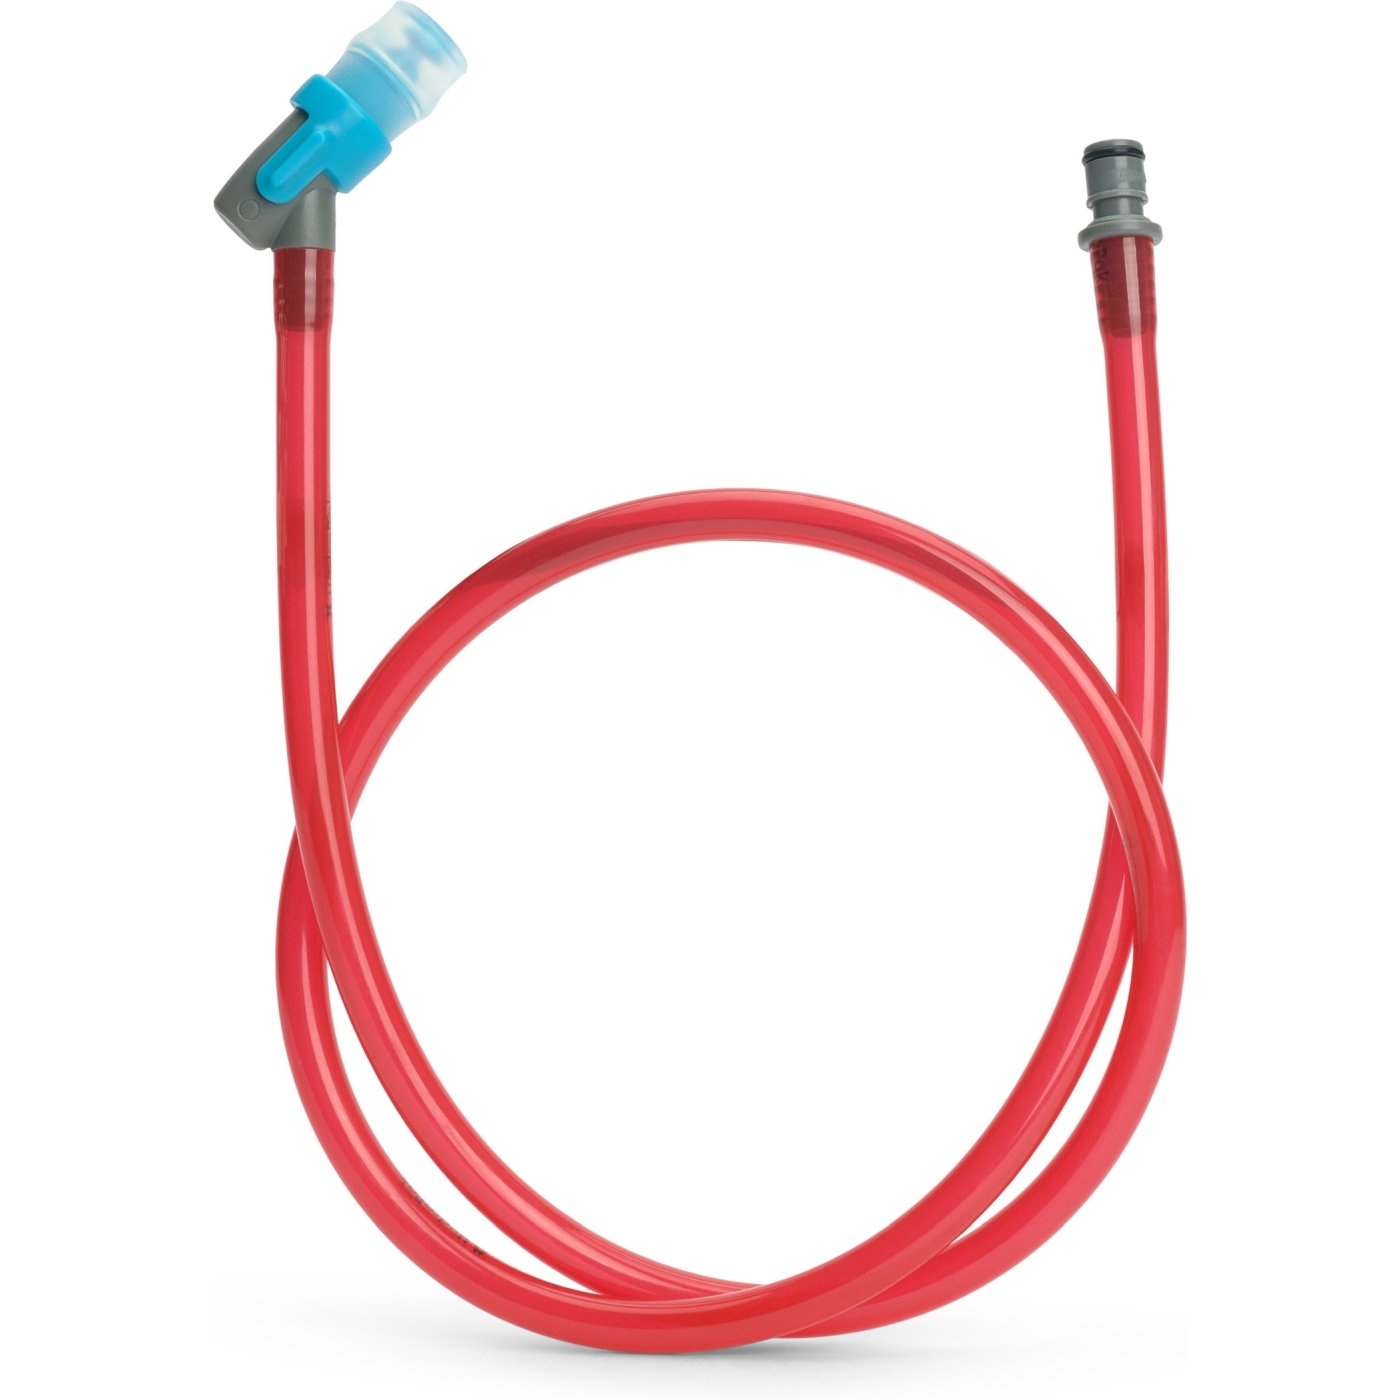 Productfoto van USWE Hydraflex Replacement Tube Reserve Slang - rood